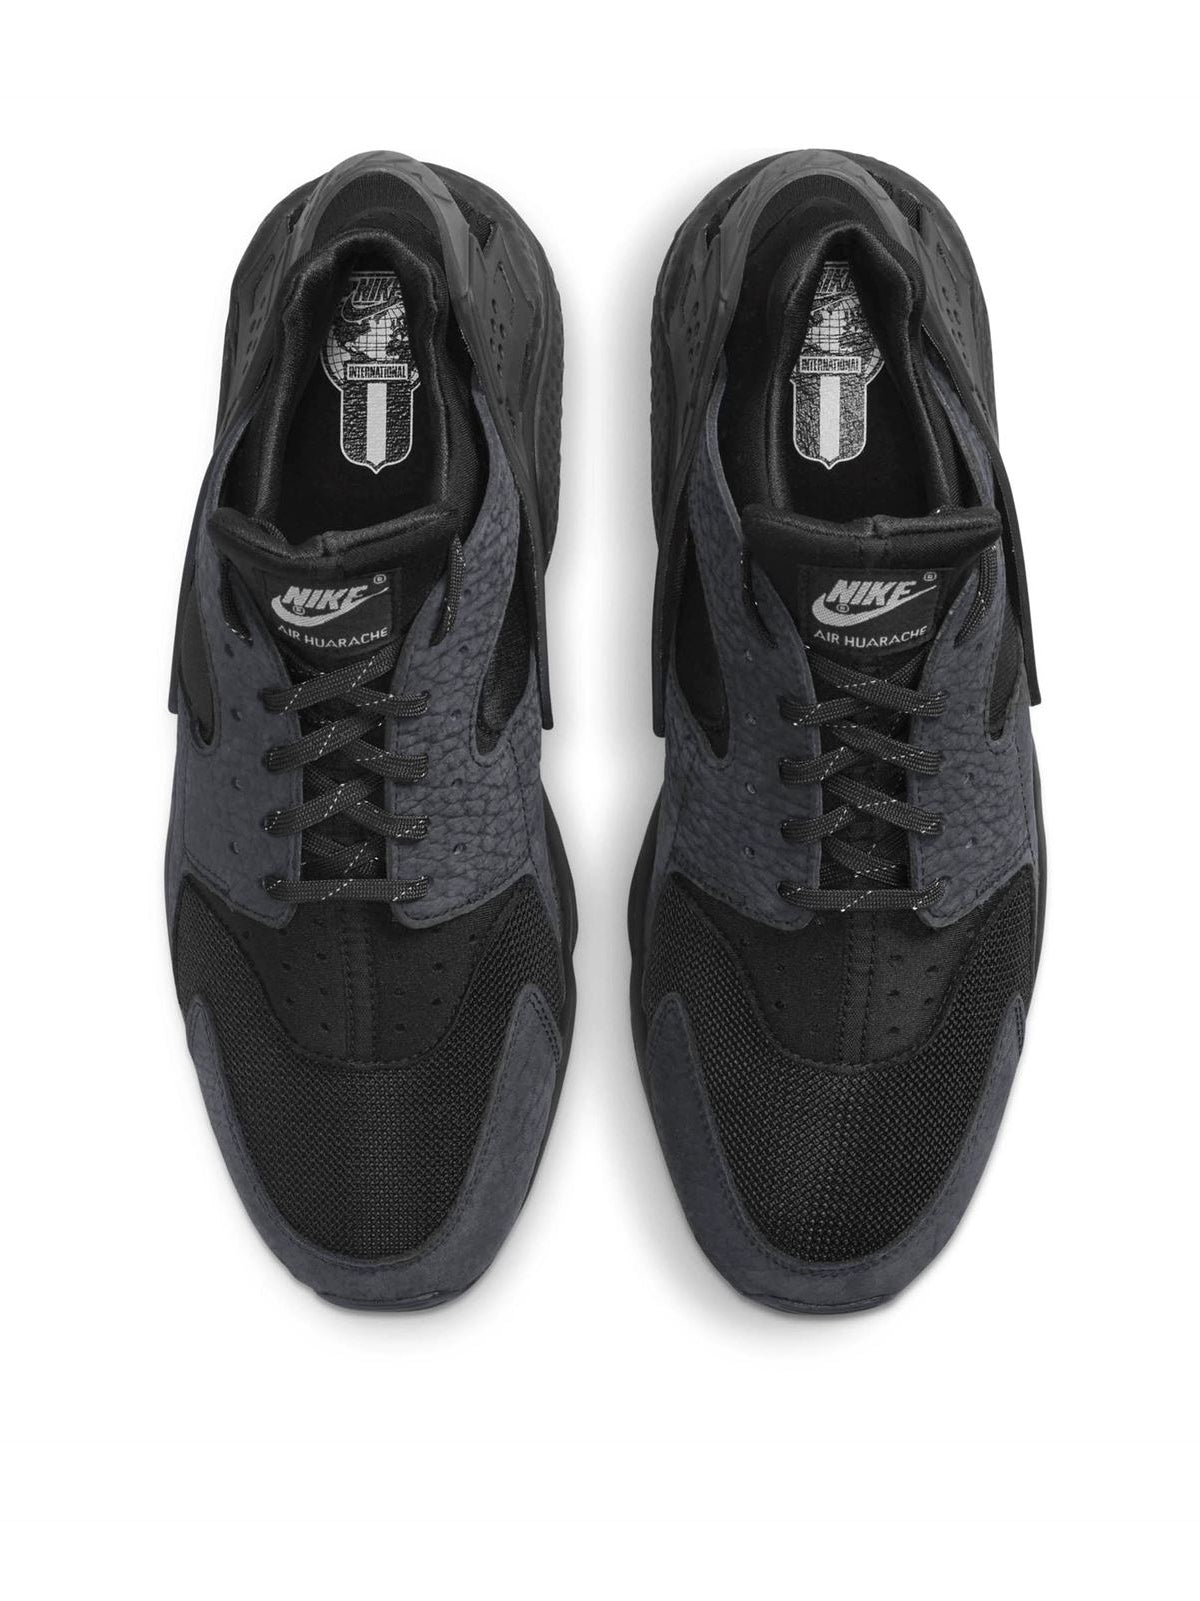 Nike-OUTLET-SALE-Air Huarache OG Hyperlocal London Sneakers-ARCHIVIST